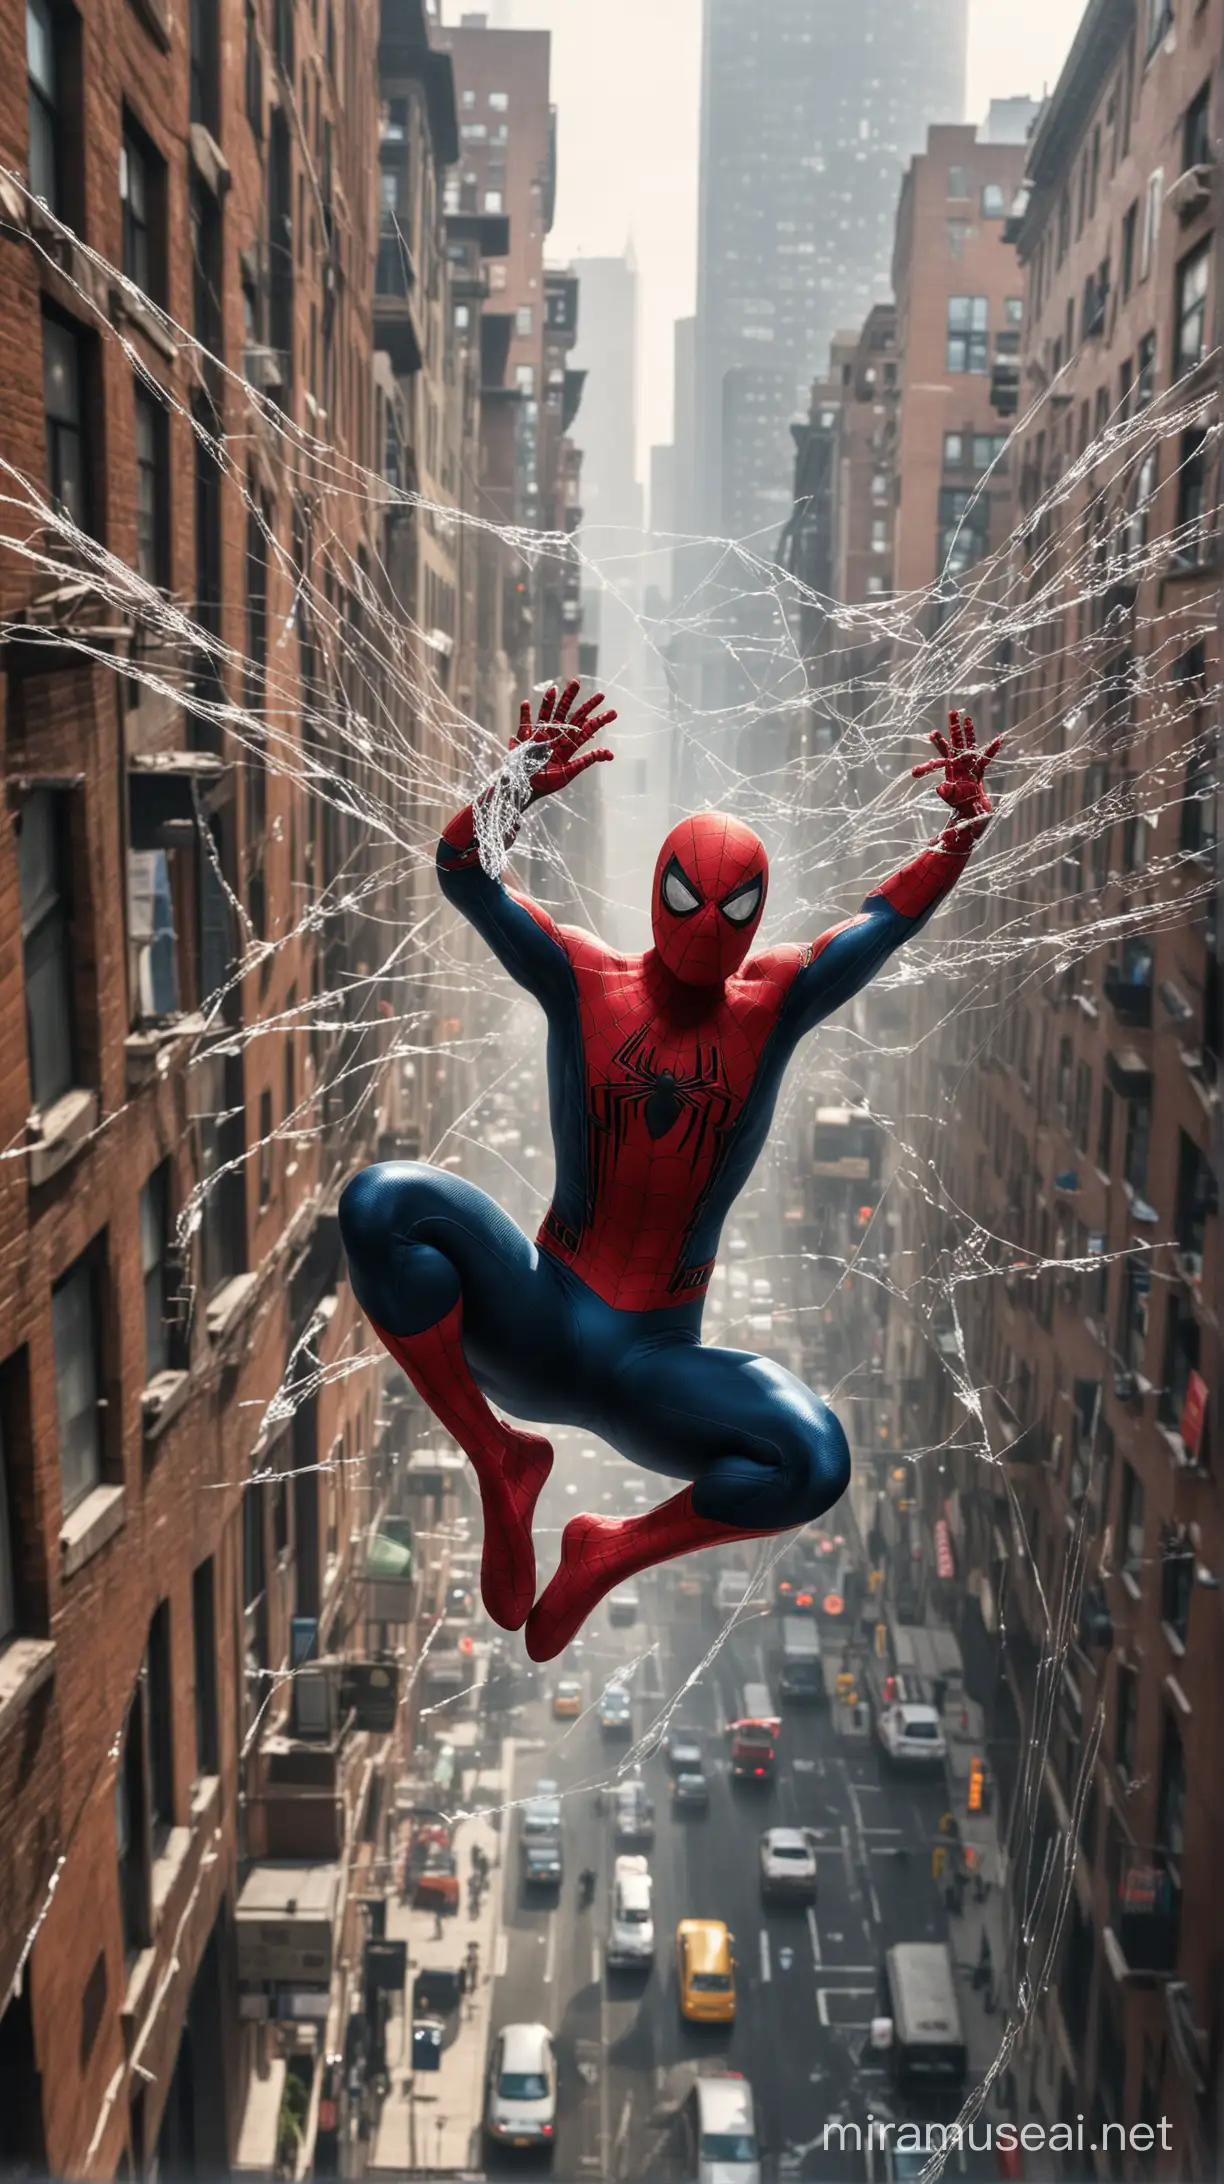 Spiderman,,terbang diatas jalanan,jaring laba-laba